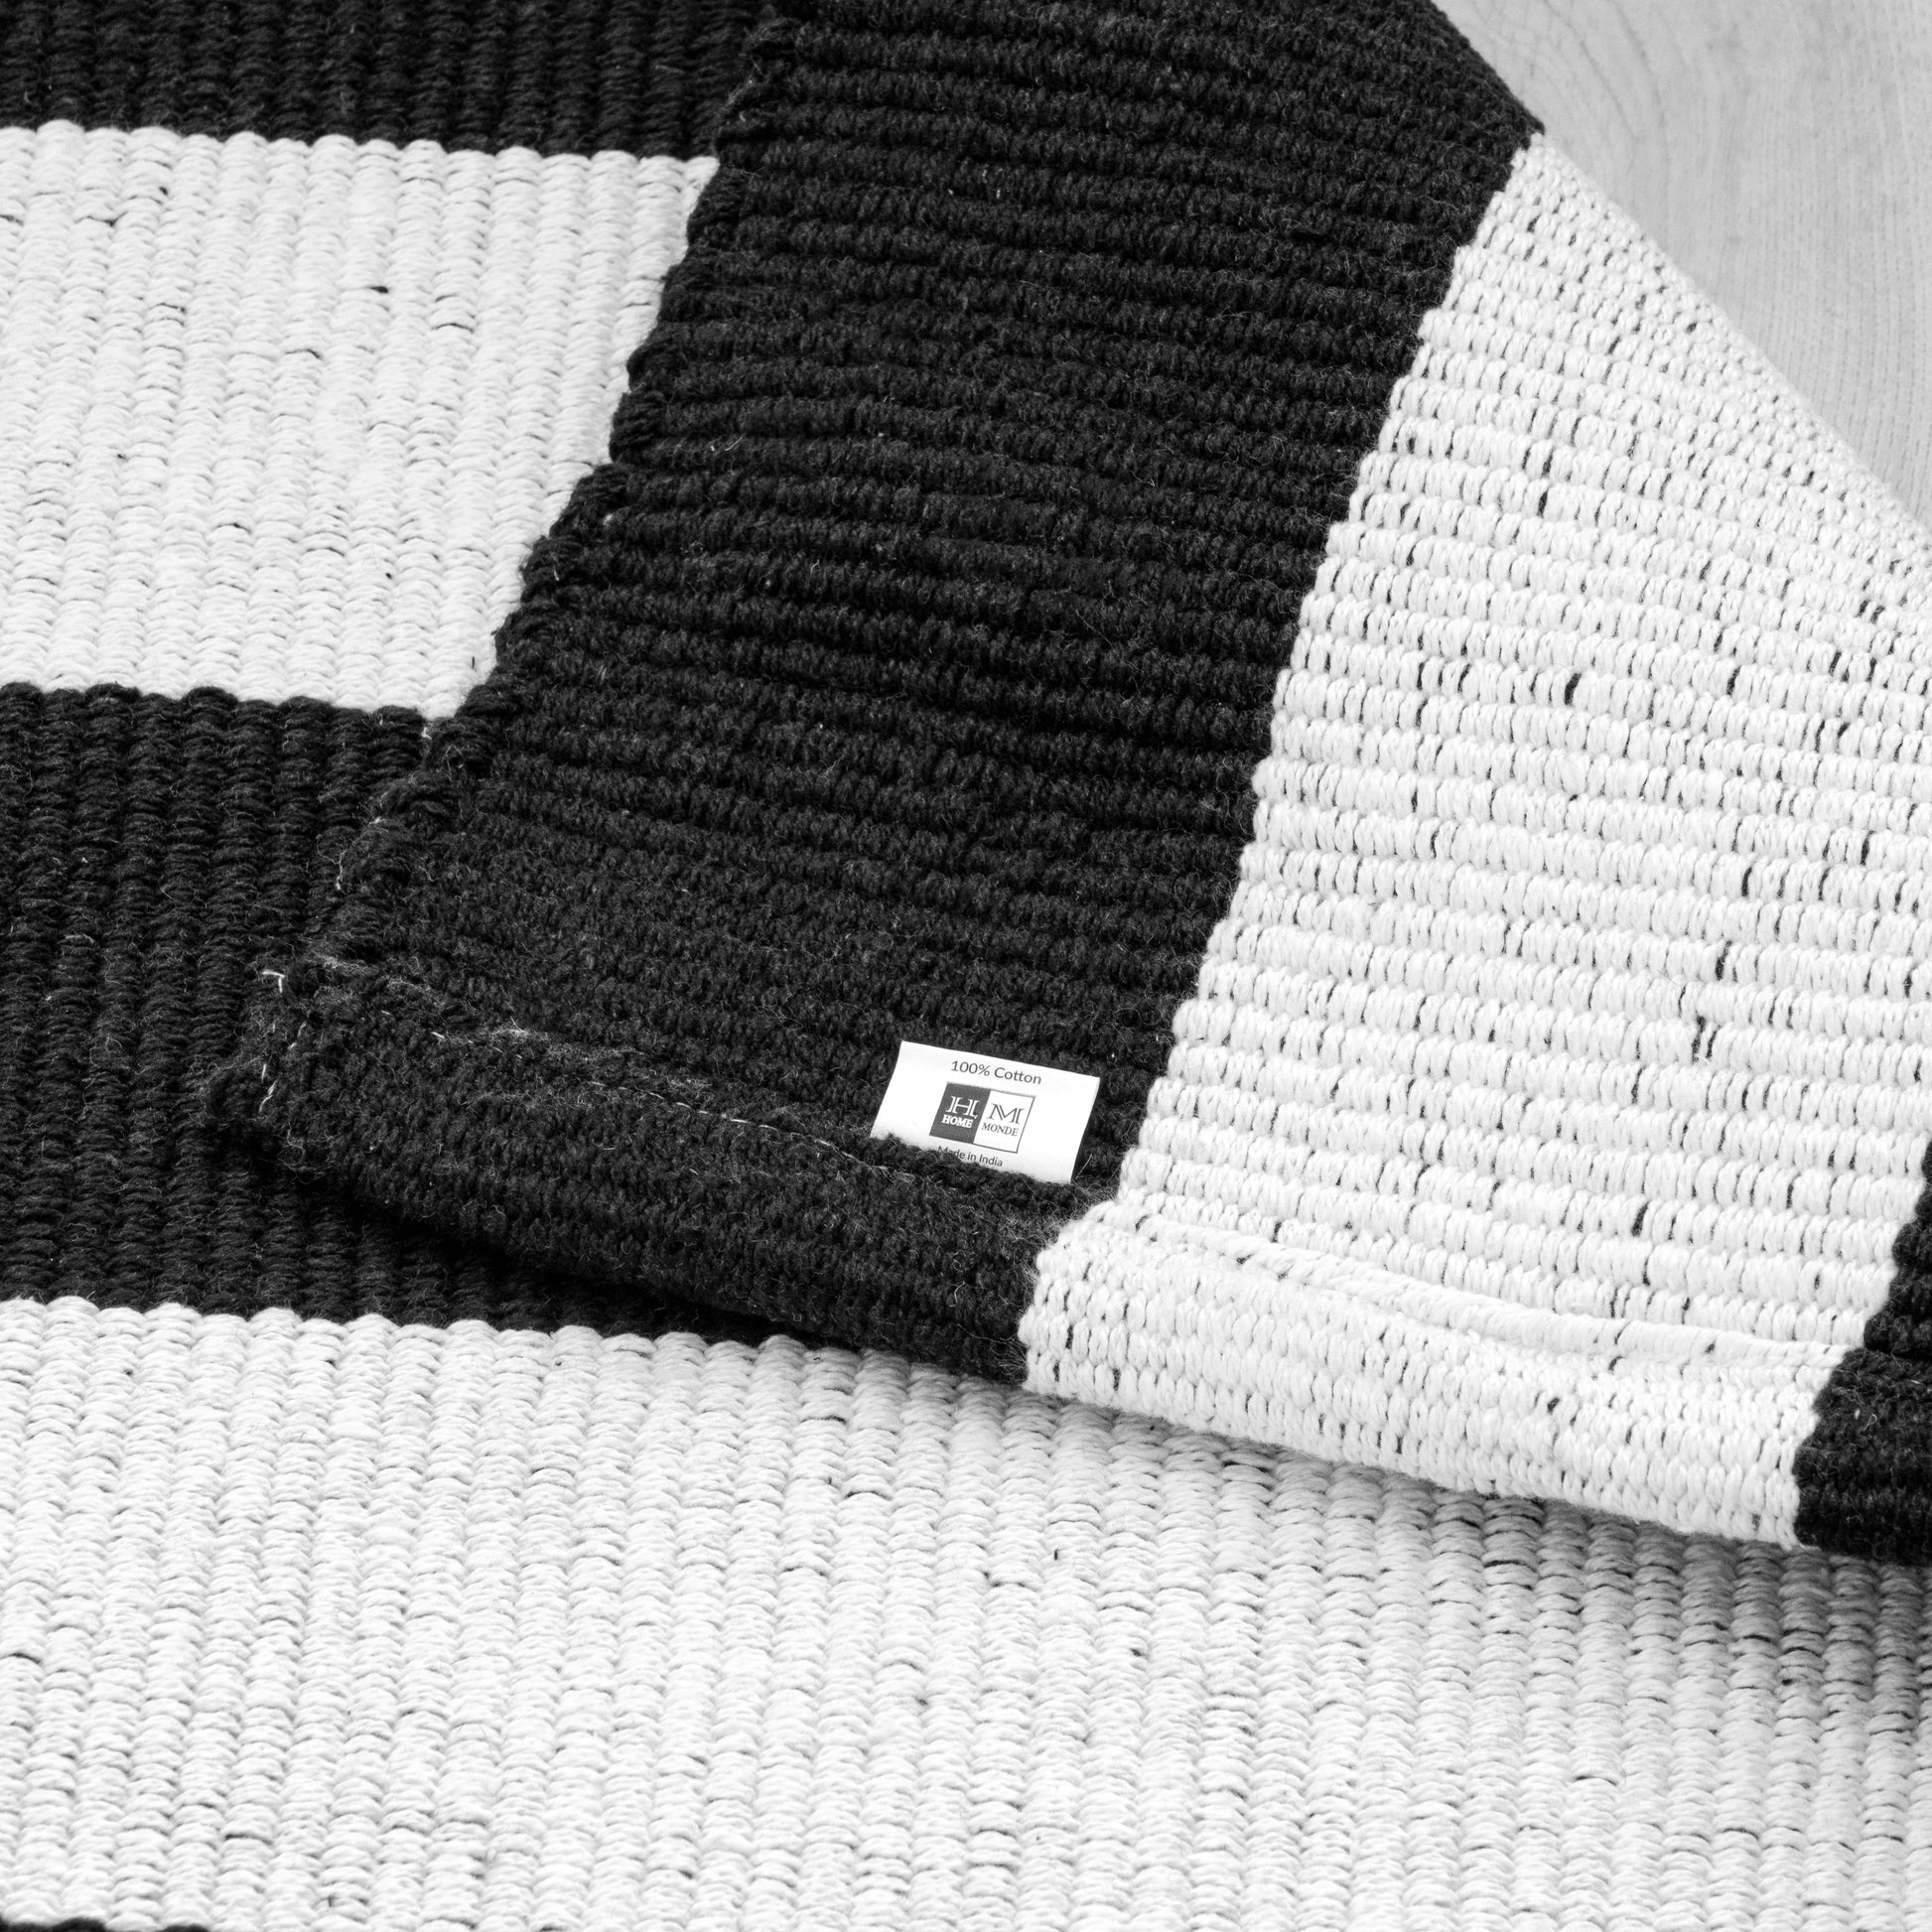 Black & White Stripe 2 x 6